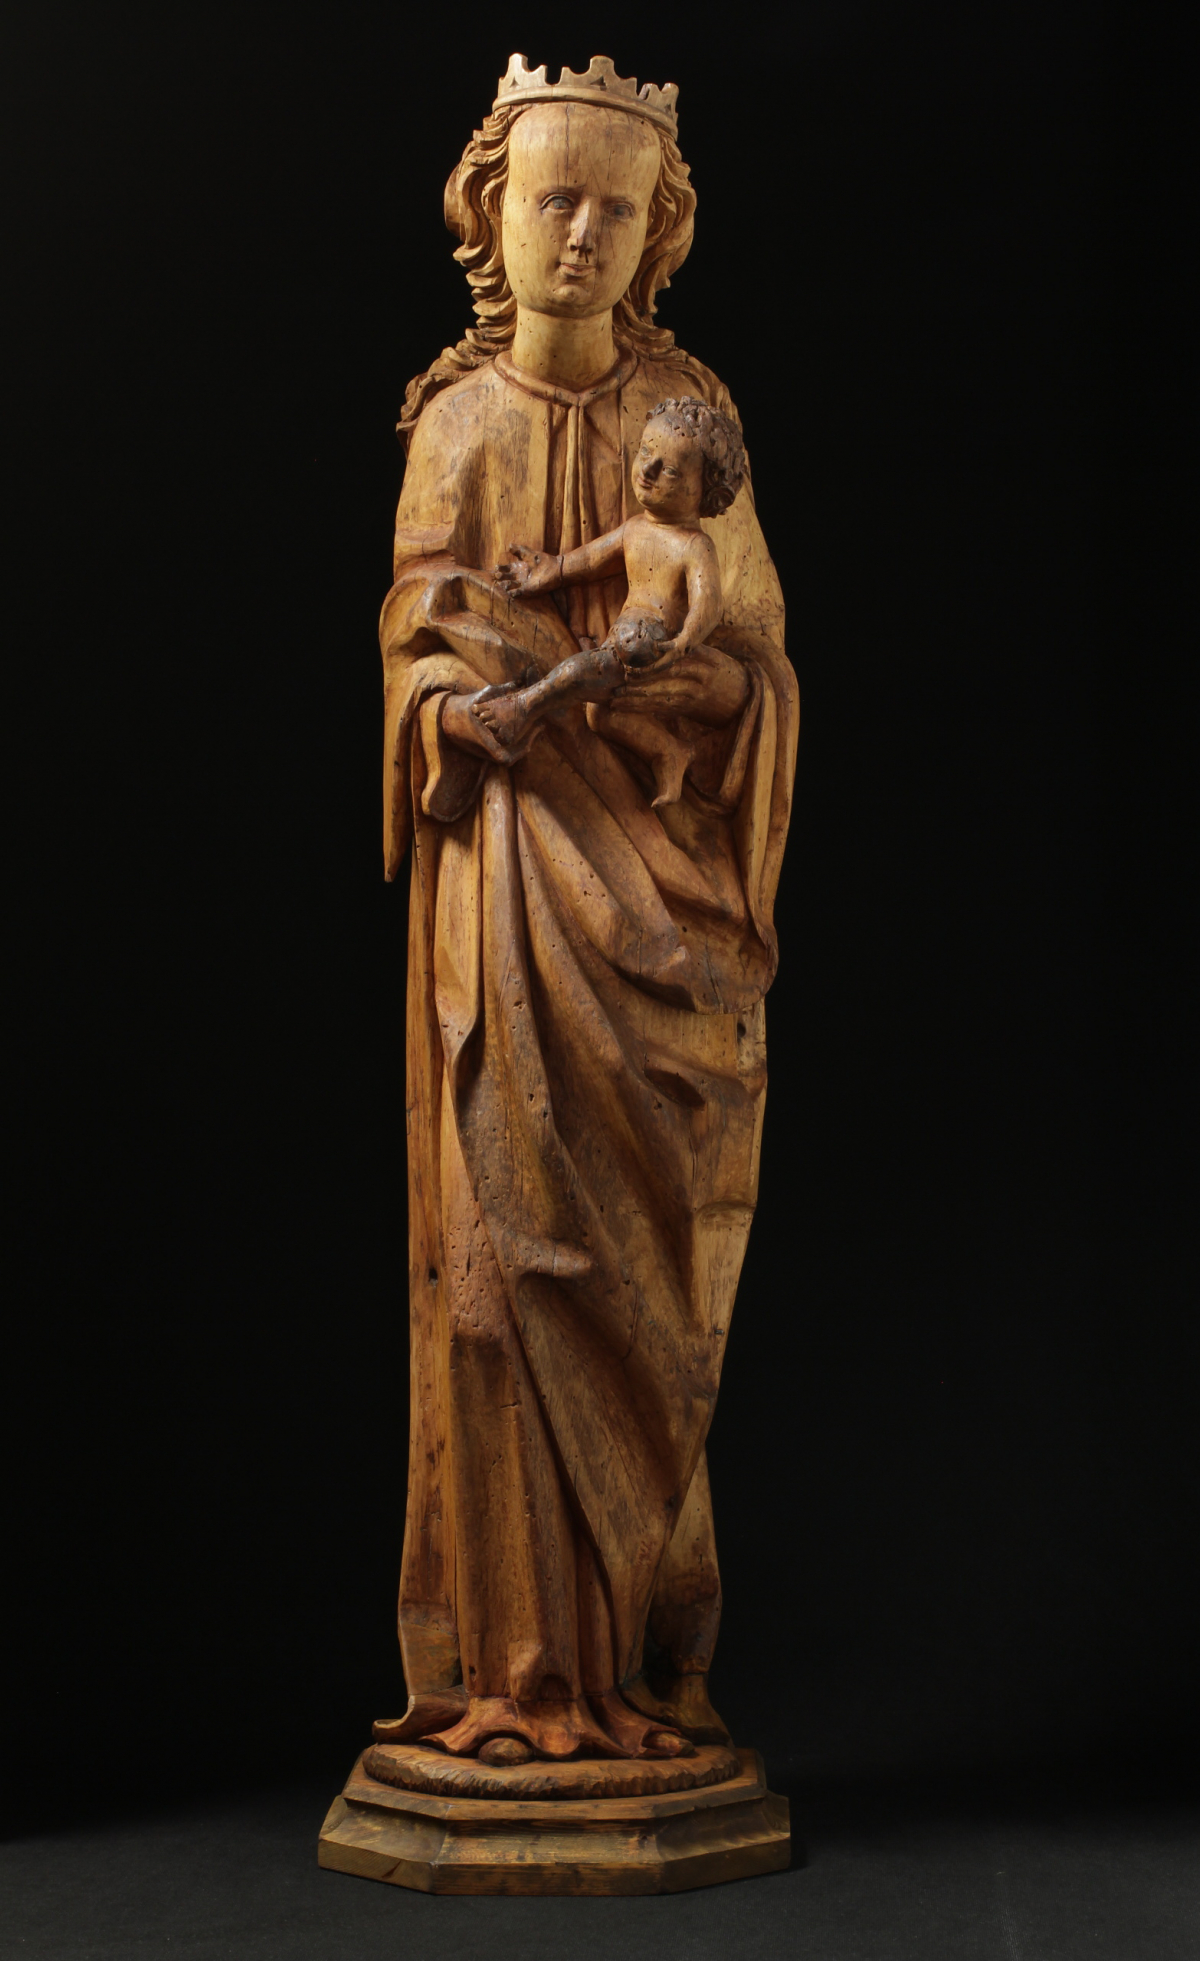 Unknown author, Madonna, 1480 -1500, sculpture, polychromed wood, h.103 cm, unmarked, Regional Gallery Liberec, restorer: Mgr. Mgr. Jakub Rafl